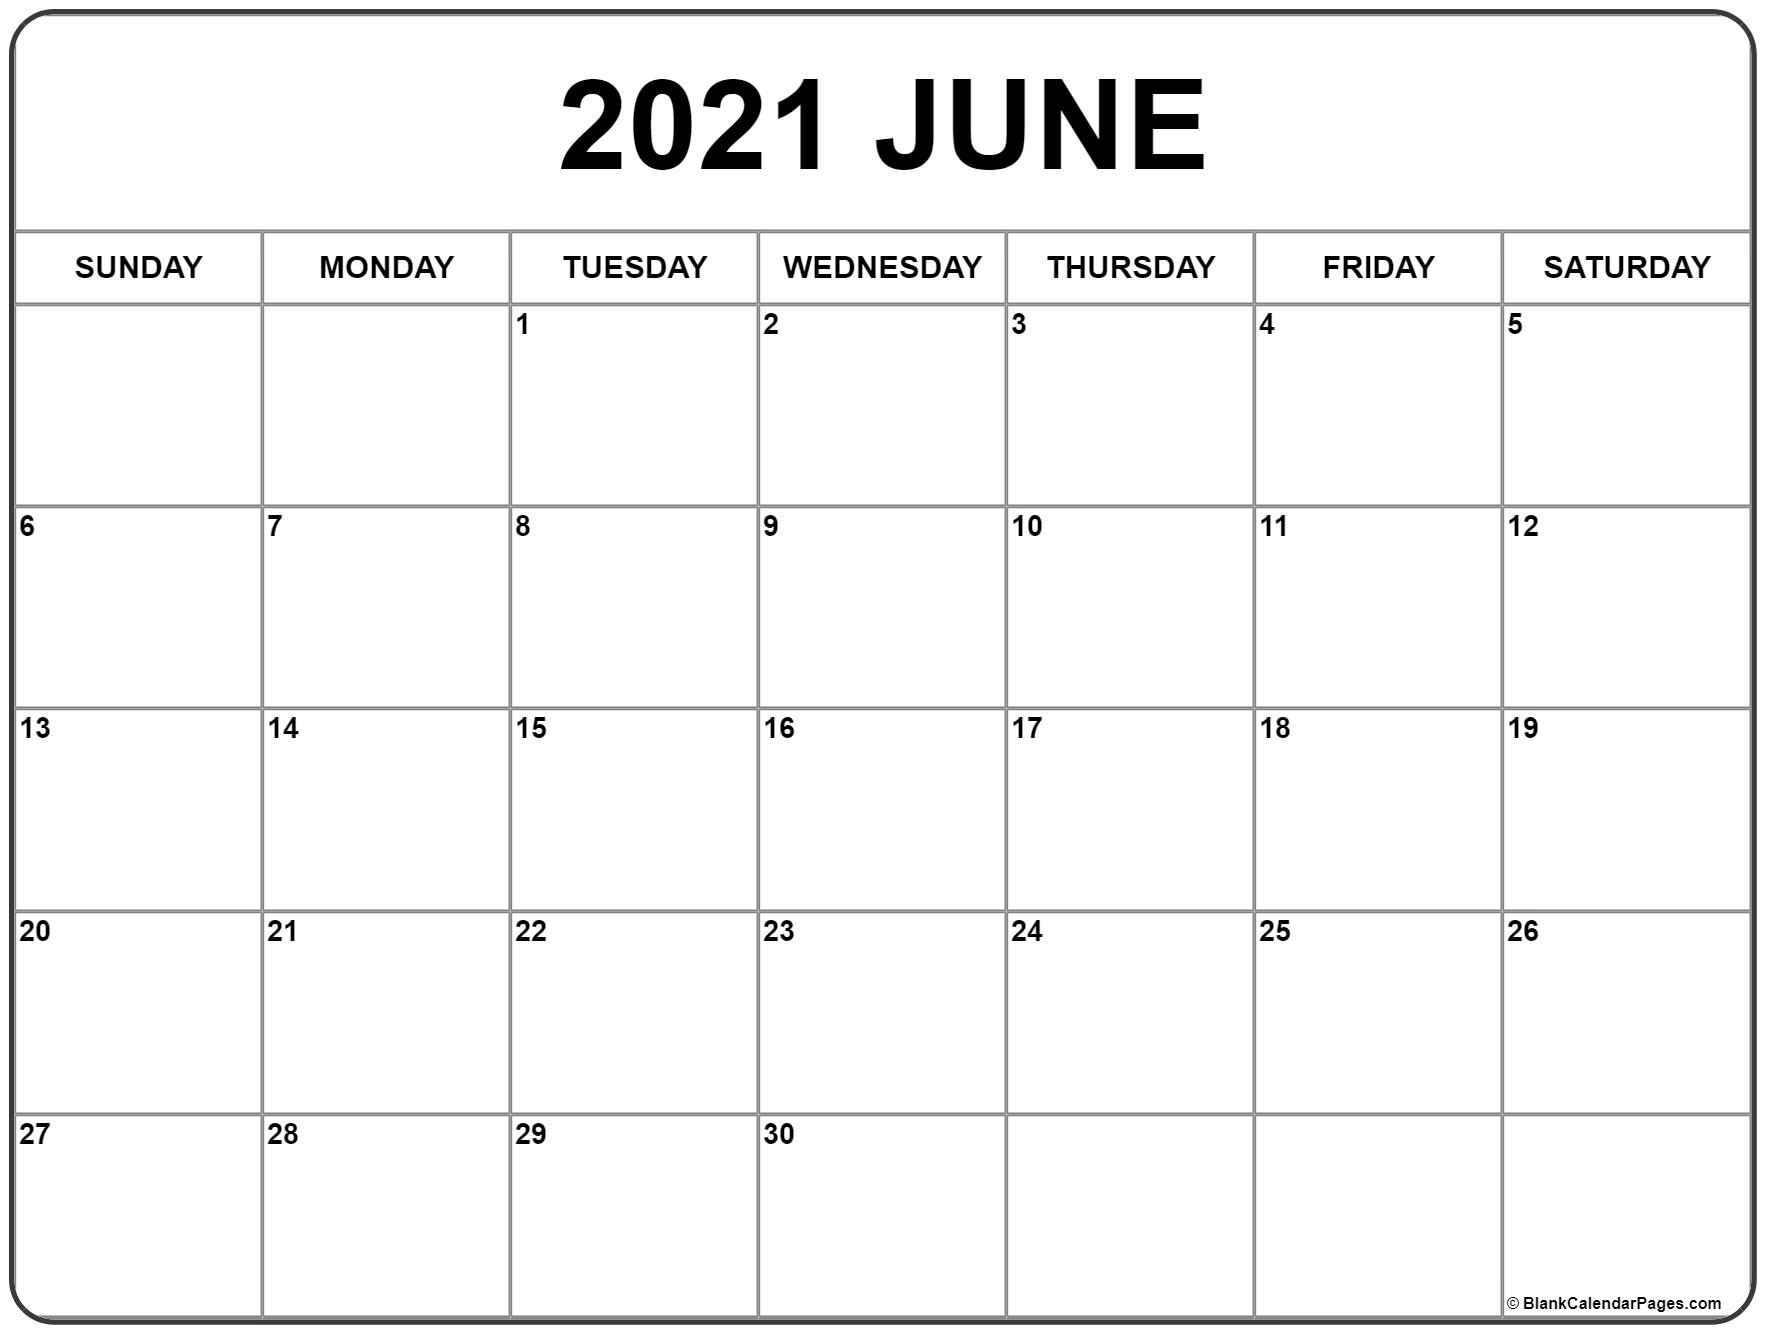 father-s-day-2021-calendar-printable-blank-calendar-template